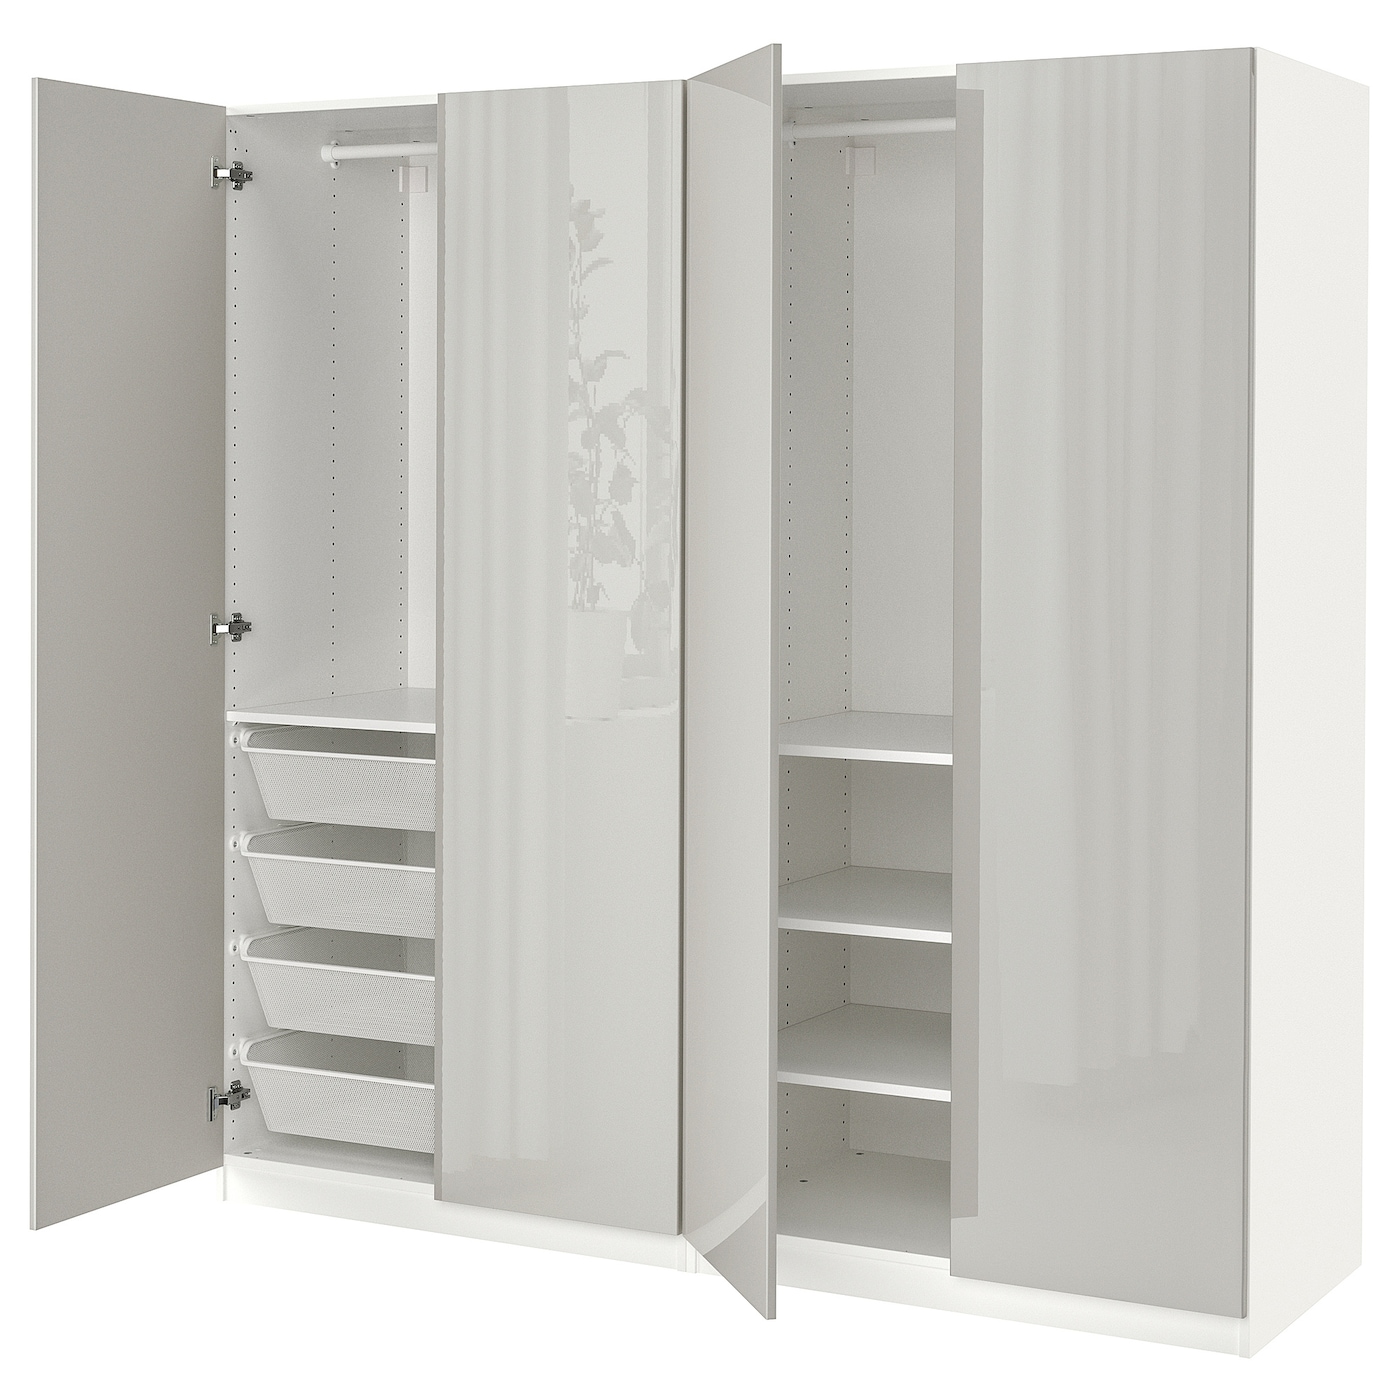 Платяной шкаф - IKEA PAX/FARDAL, 200x60x201 см, белый /глянцевый светло-серый ПАКС/ФАРДАЛЬ ИКЕА